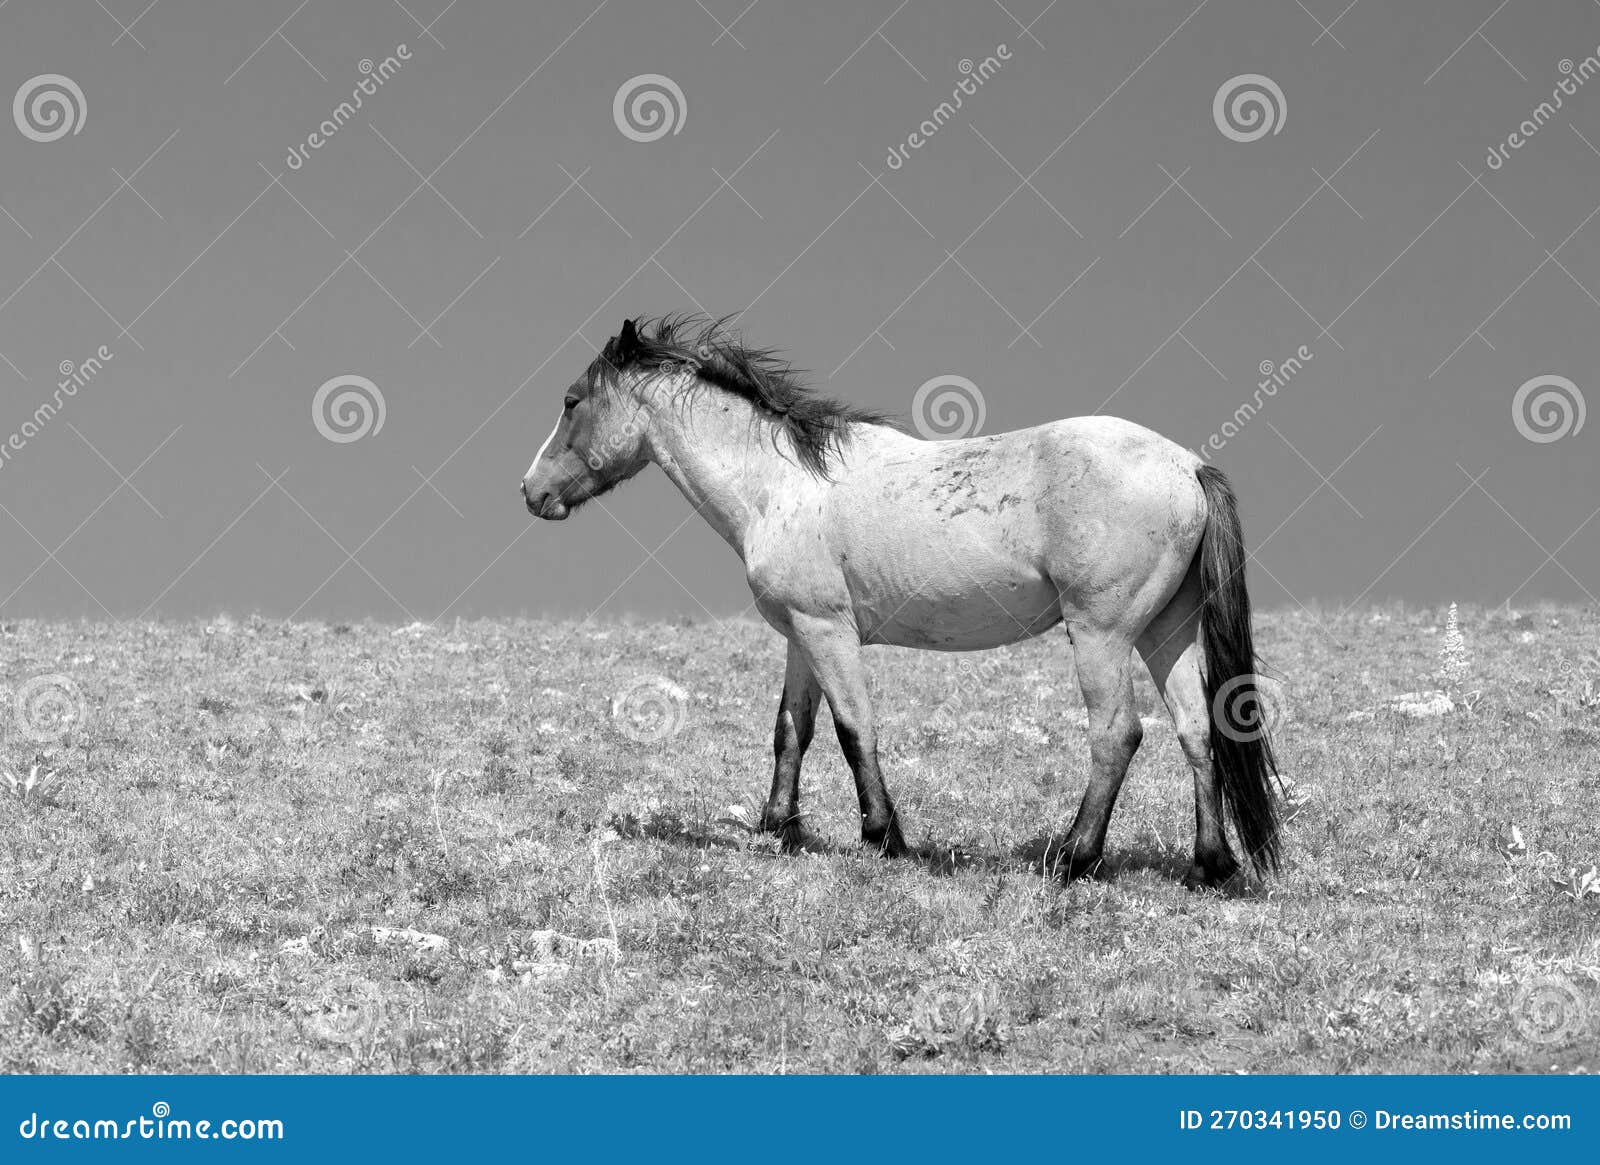 lone pale roan stallion wild horse on desert mountain ridge - black and white